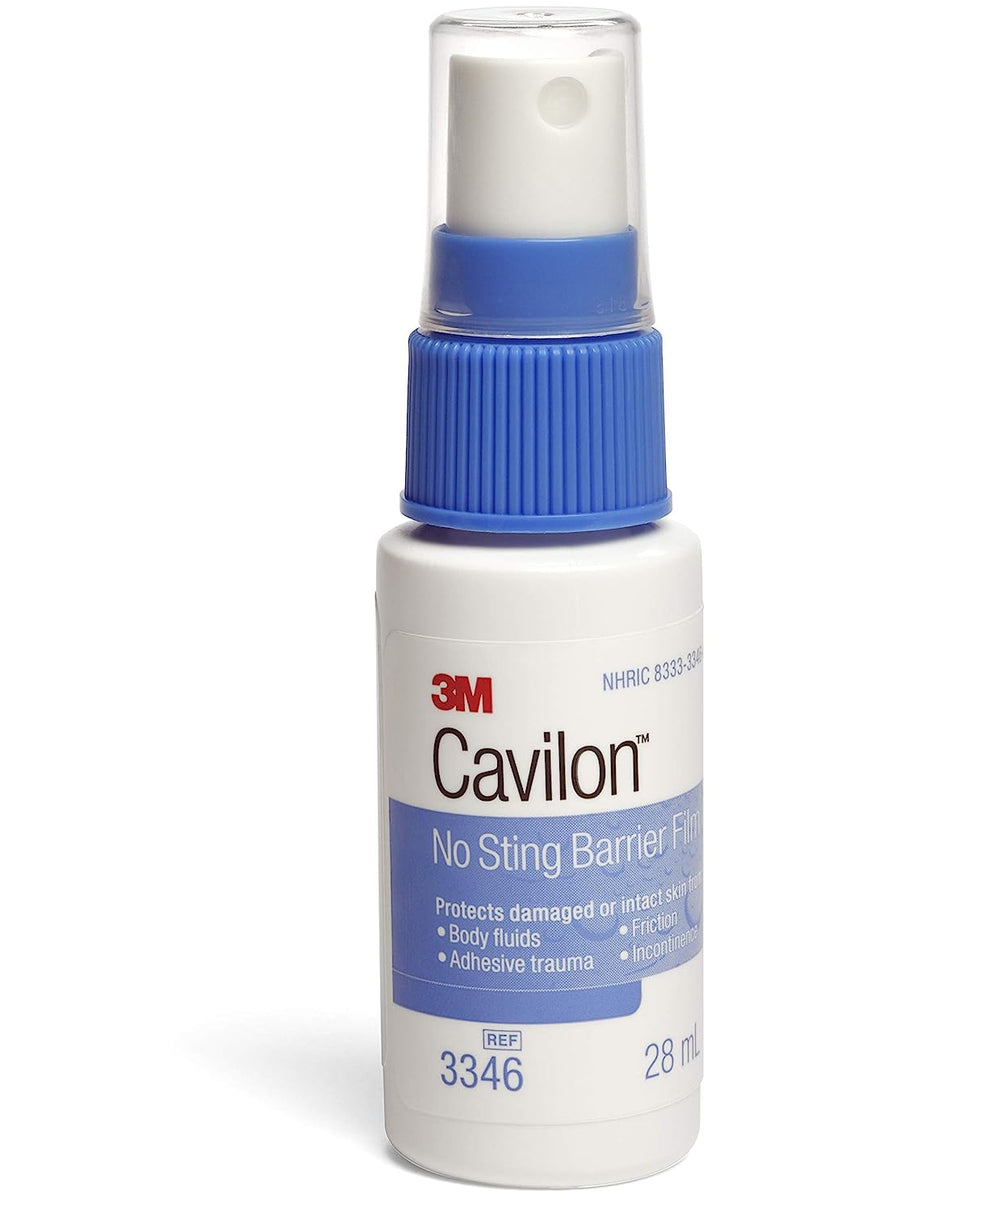 3M Cavilon No Sting Barrier Film, 28 ml Bottle - Case of 12